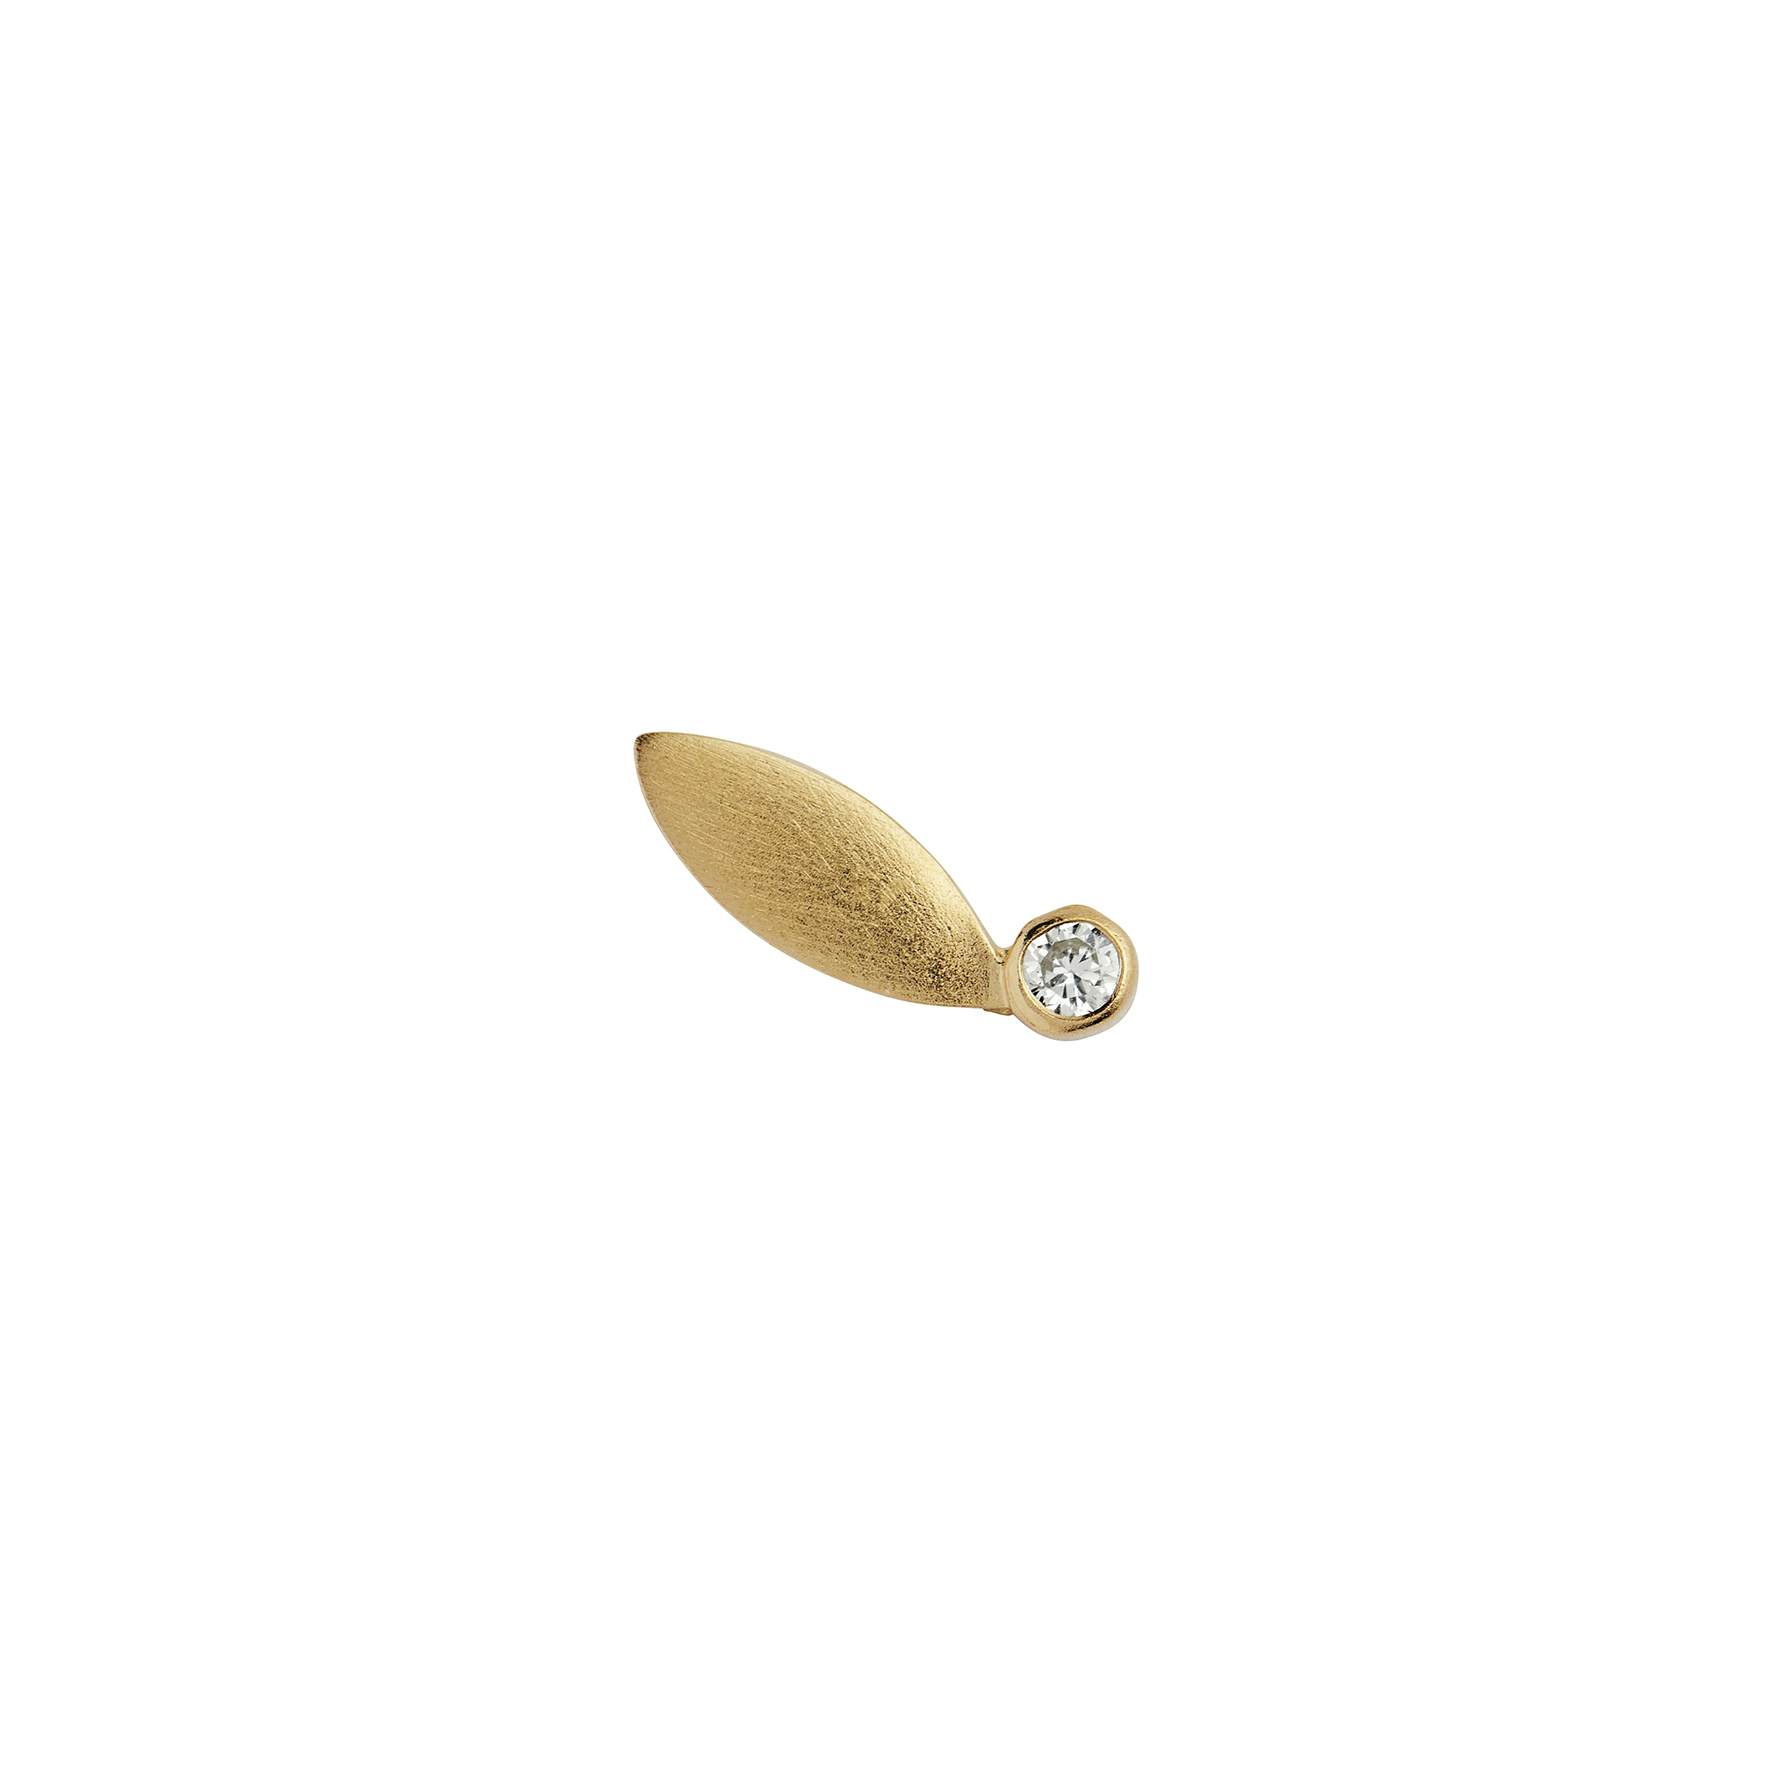 Big Dot Leaf Earstick Light Peridot von STINE A Jewelry in Vergoldet-Silber Sterling 925